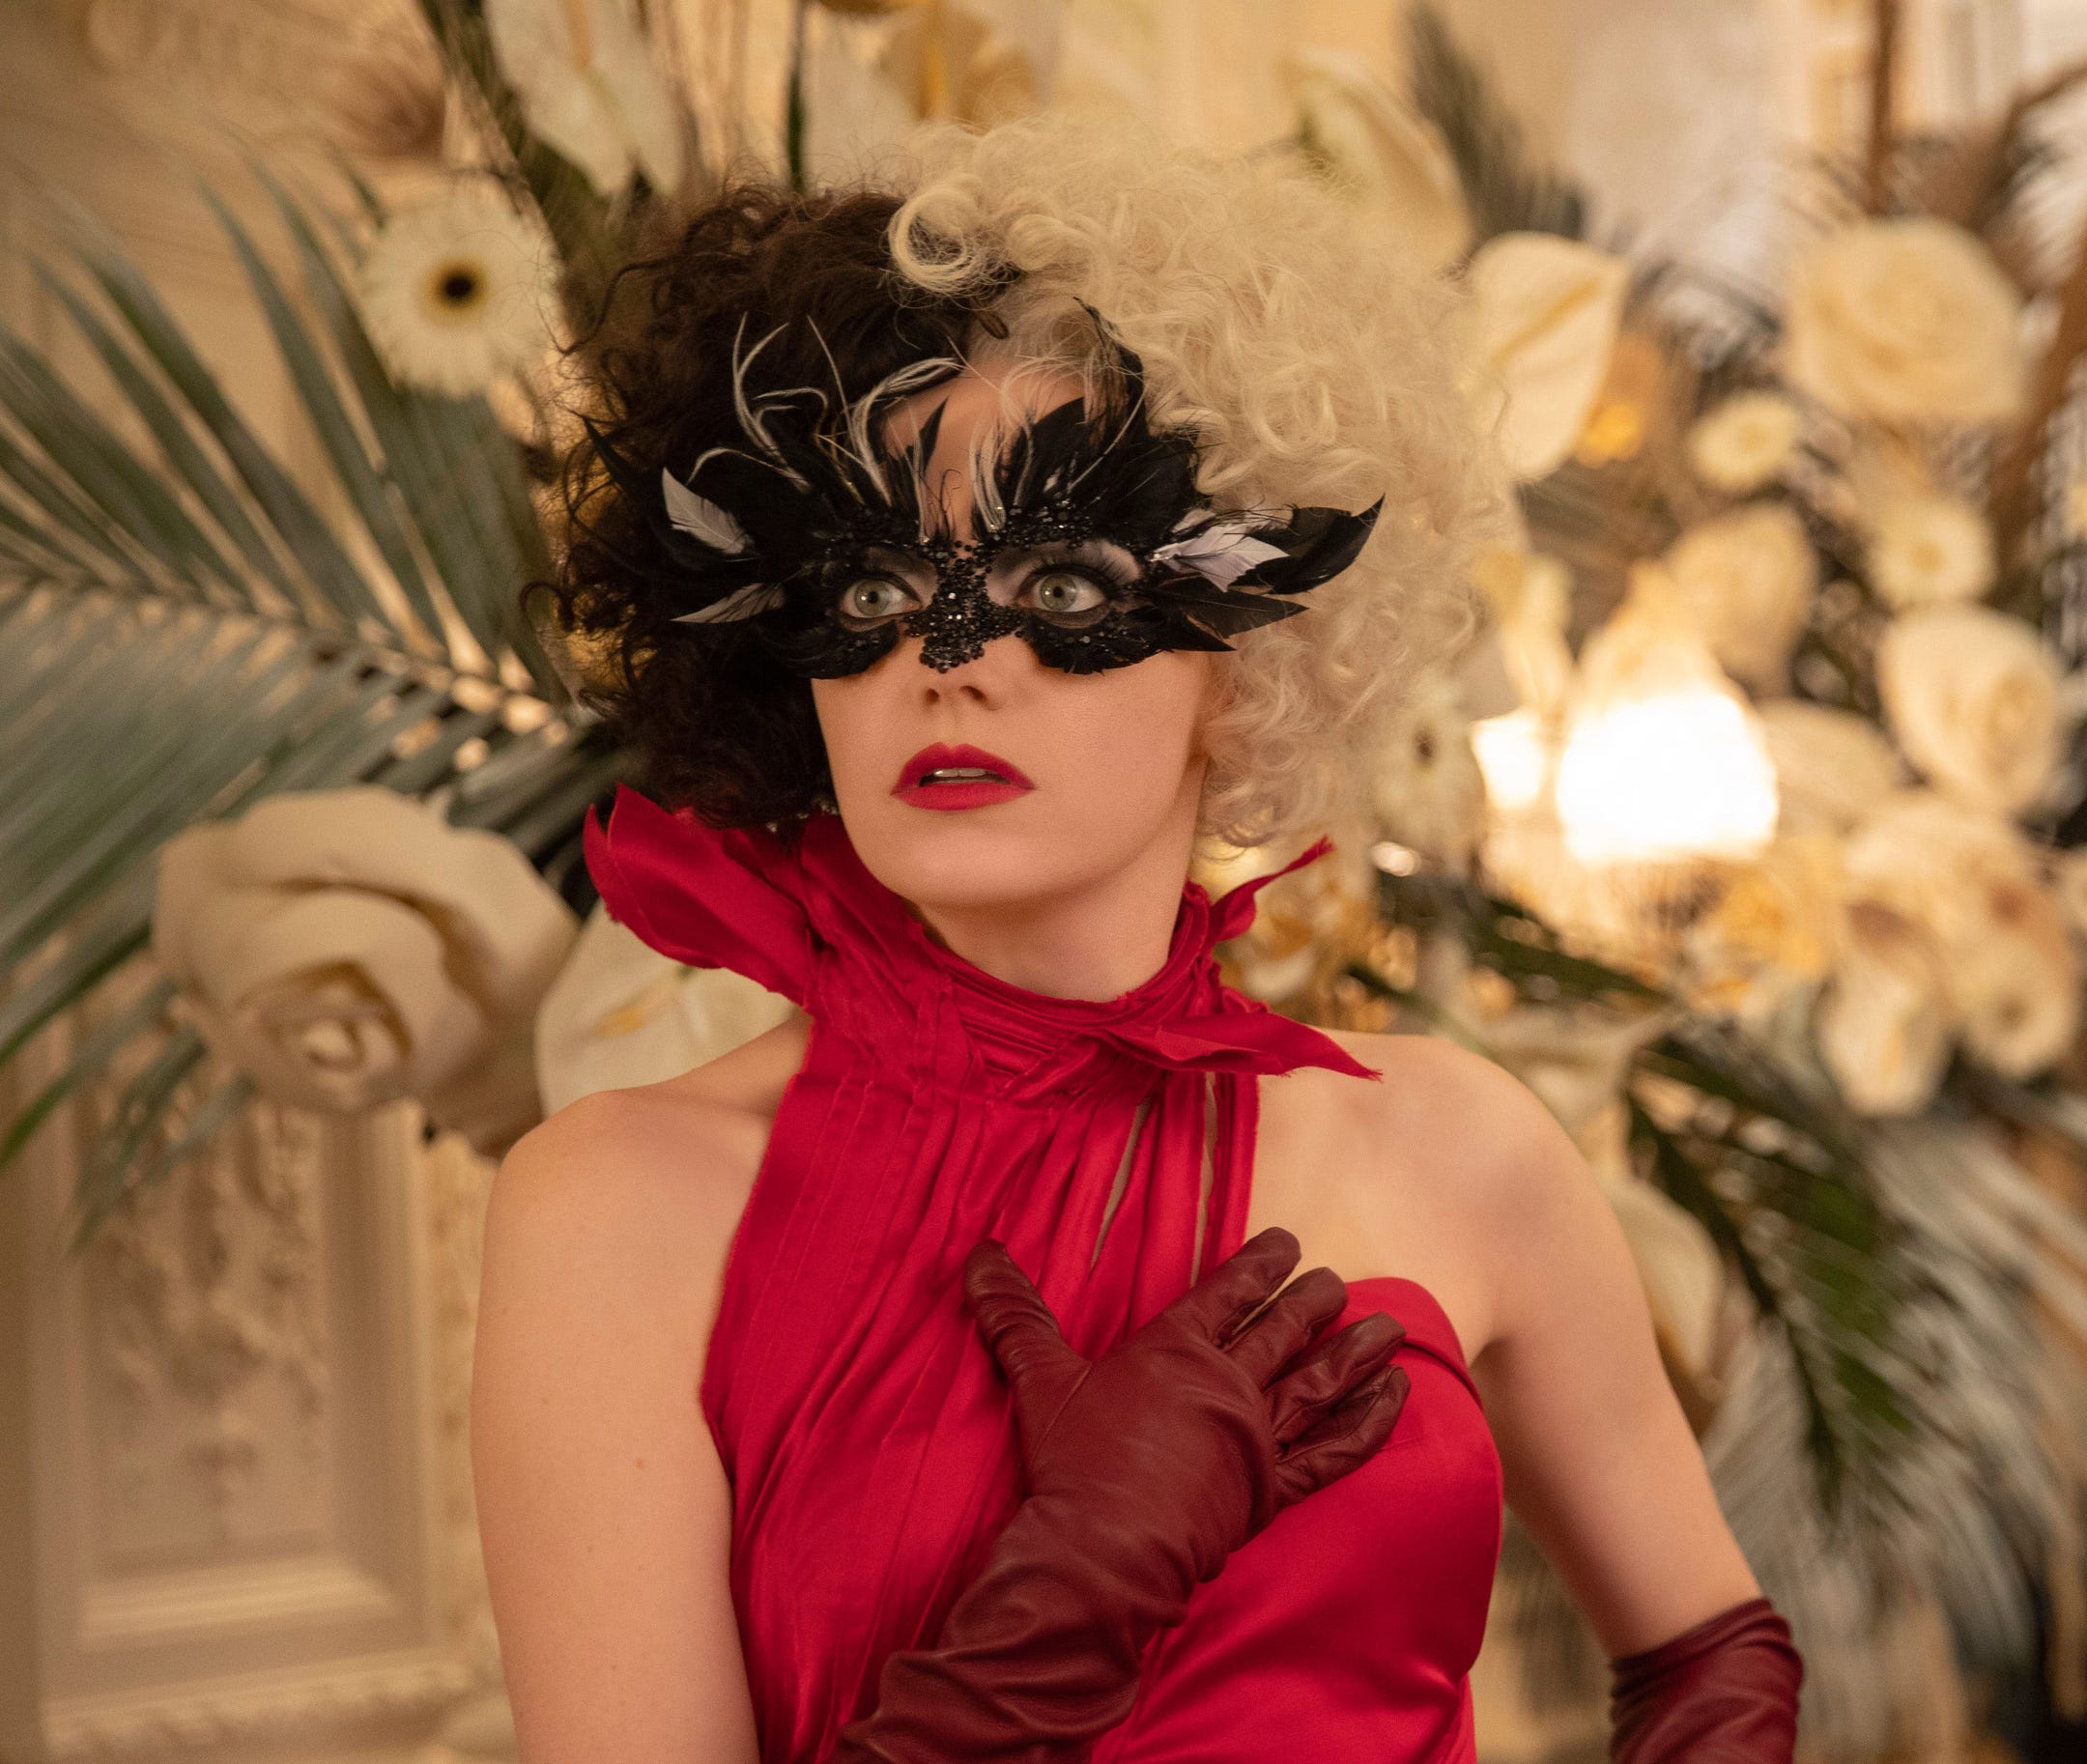 2021 Cruella De Vil Emma Stone Red Dress Cosplay Costume-Takerlama